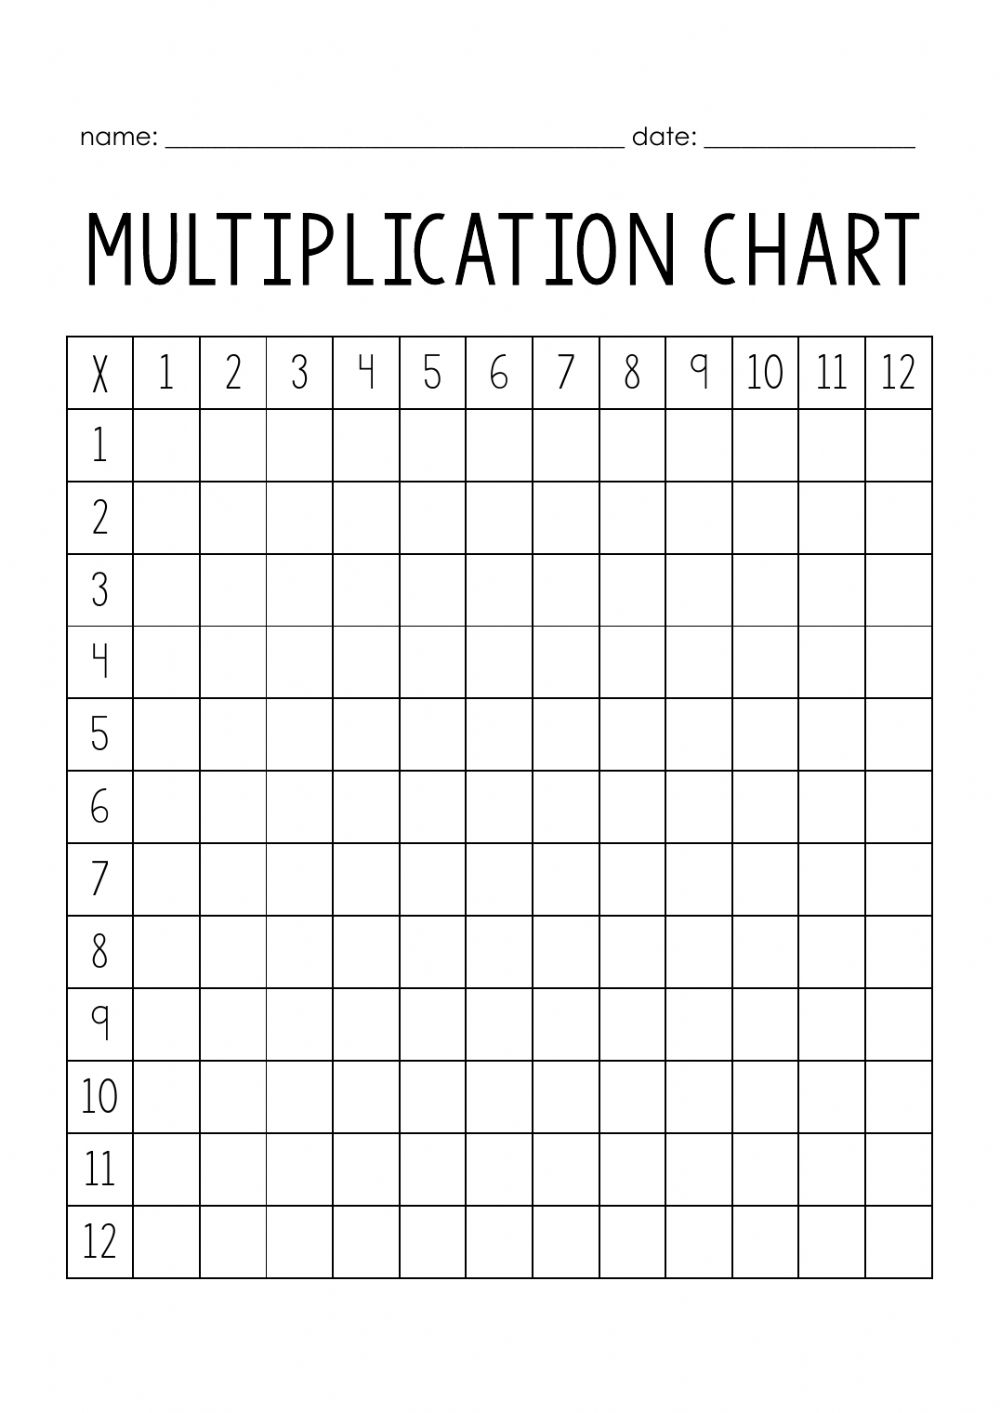 multiplication-chart-1-12-printable-worksheets-2023-multiplication